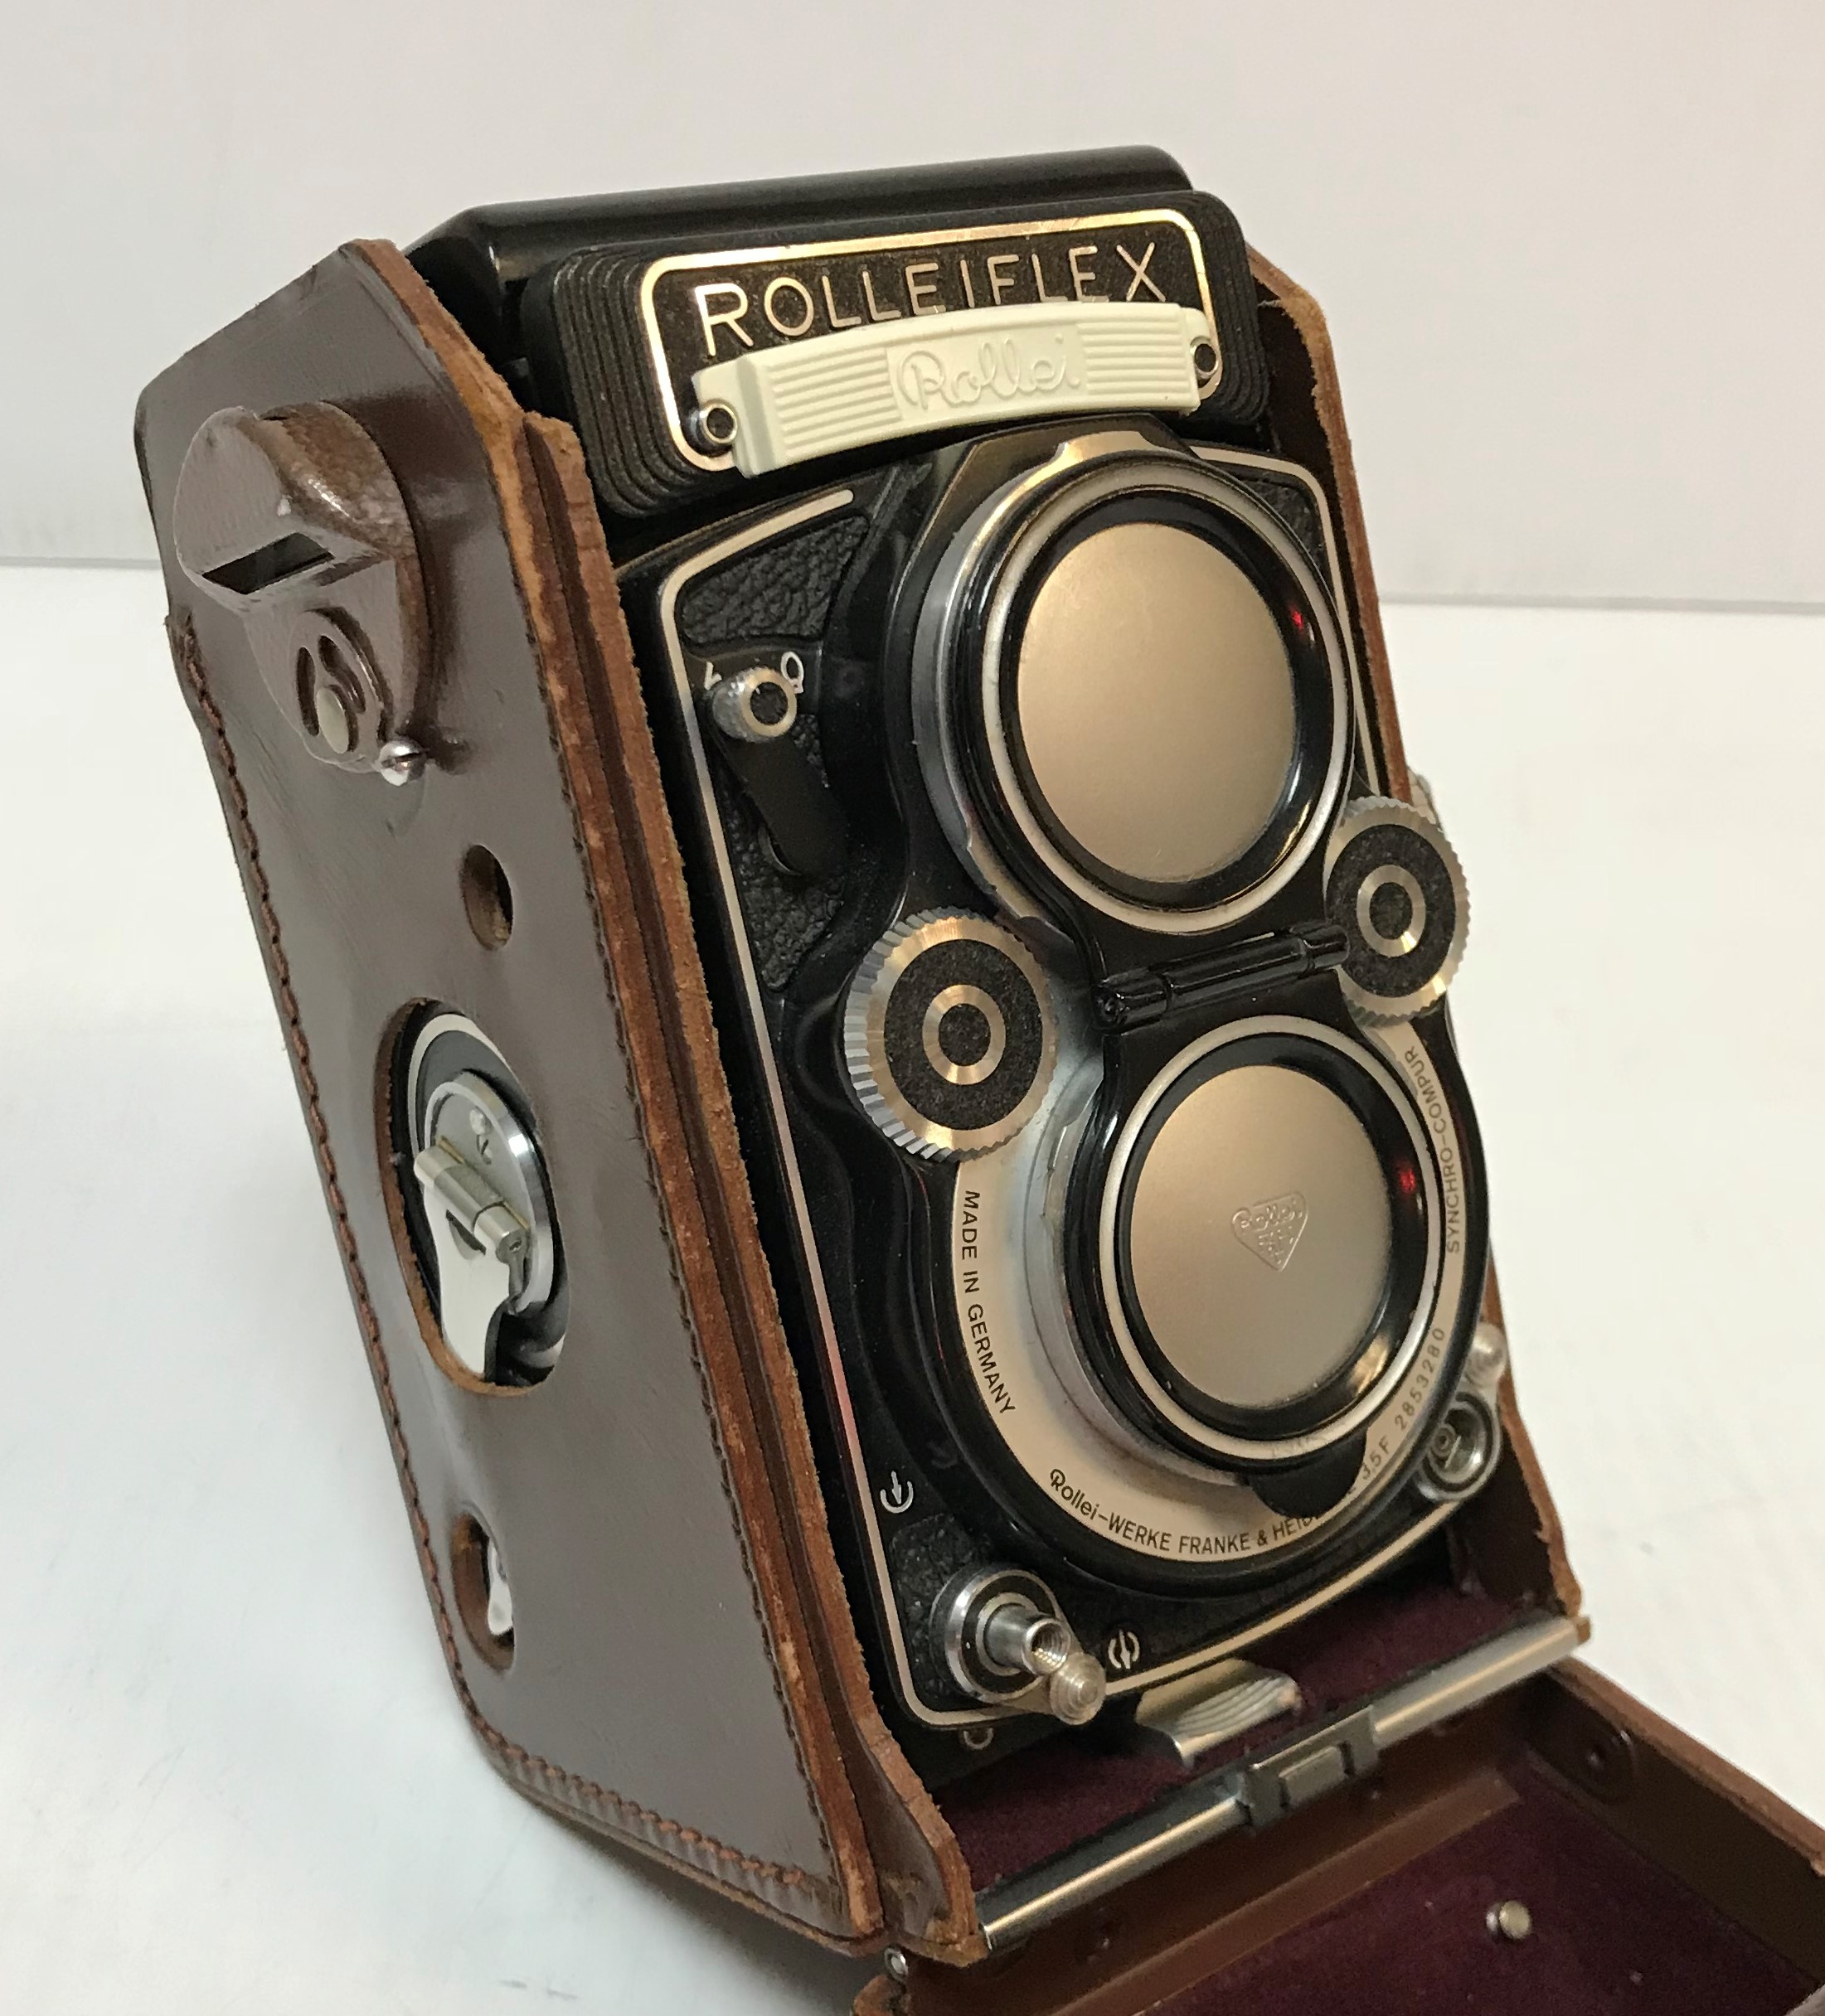 A Franke & Heideke Rolleiflex twin reflex camera (No.